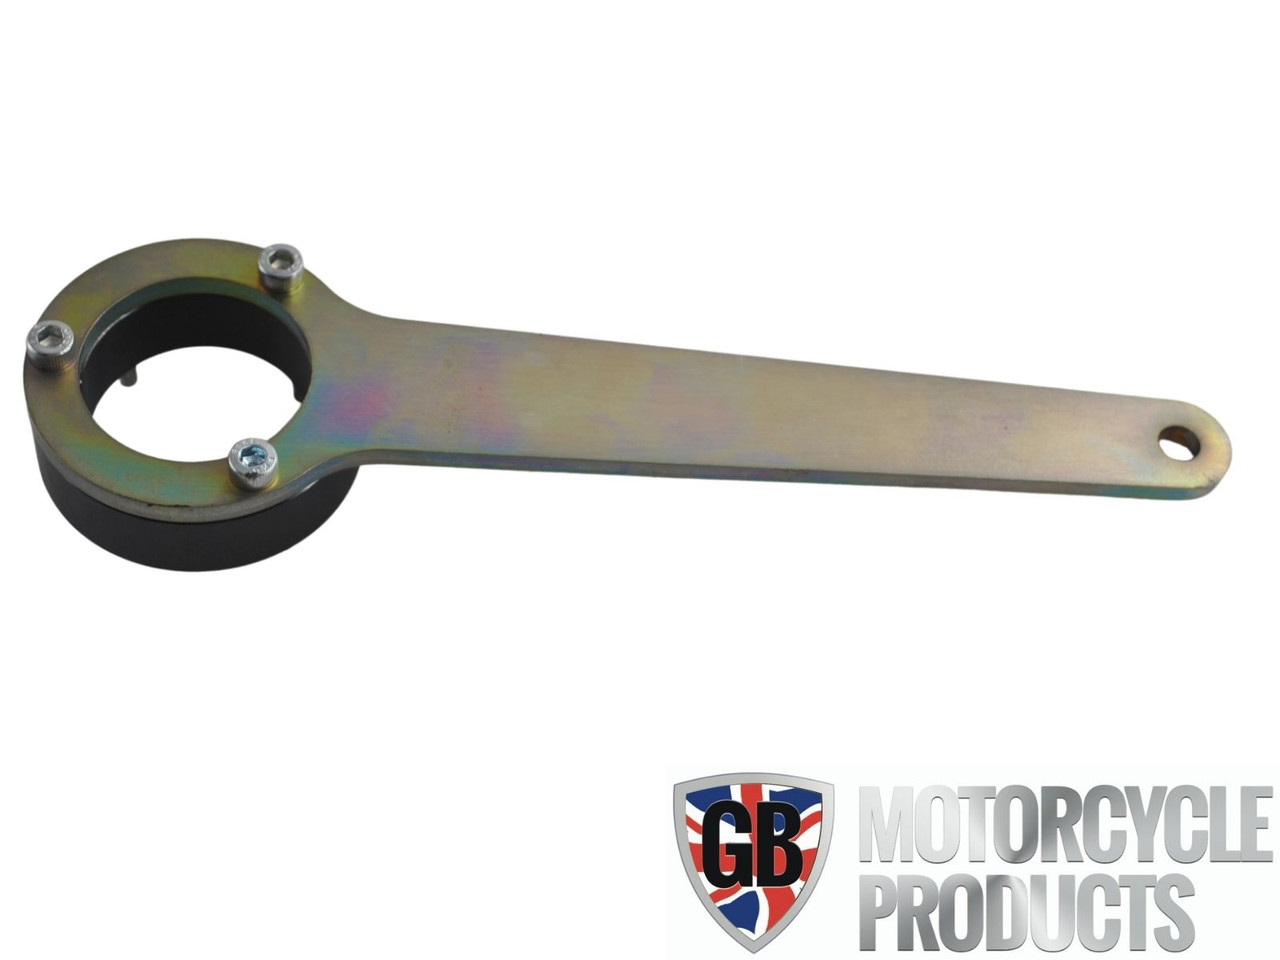 Ducati Monster 400 1995-2008 Crankshaft Gear Holding tool Pt No. No 887130137